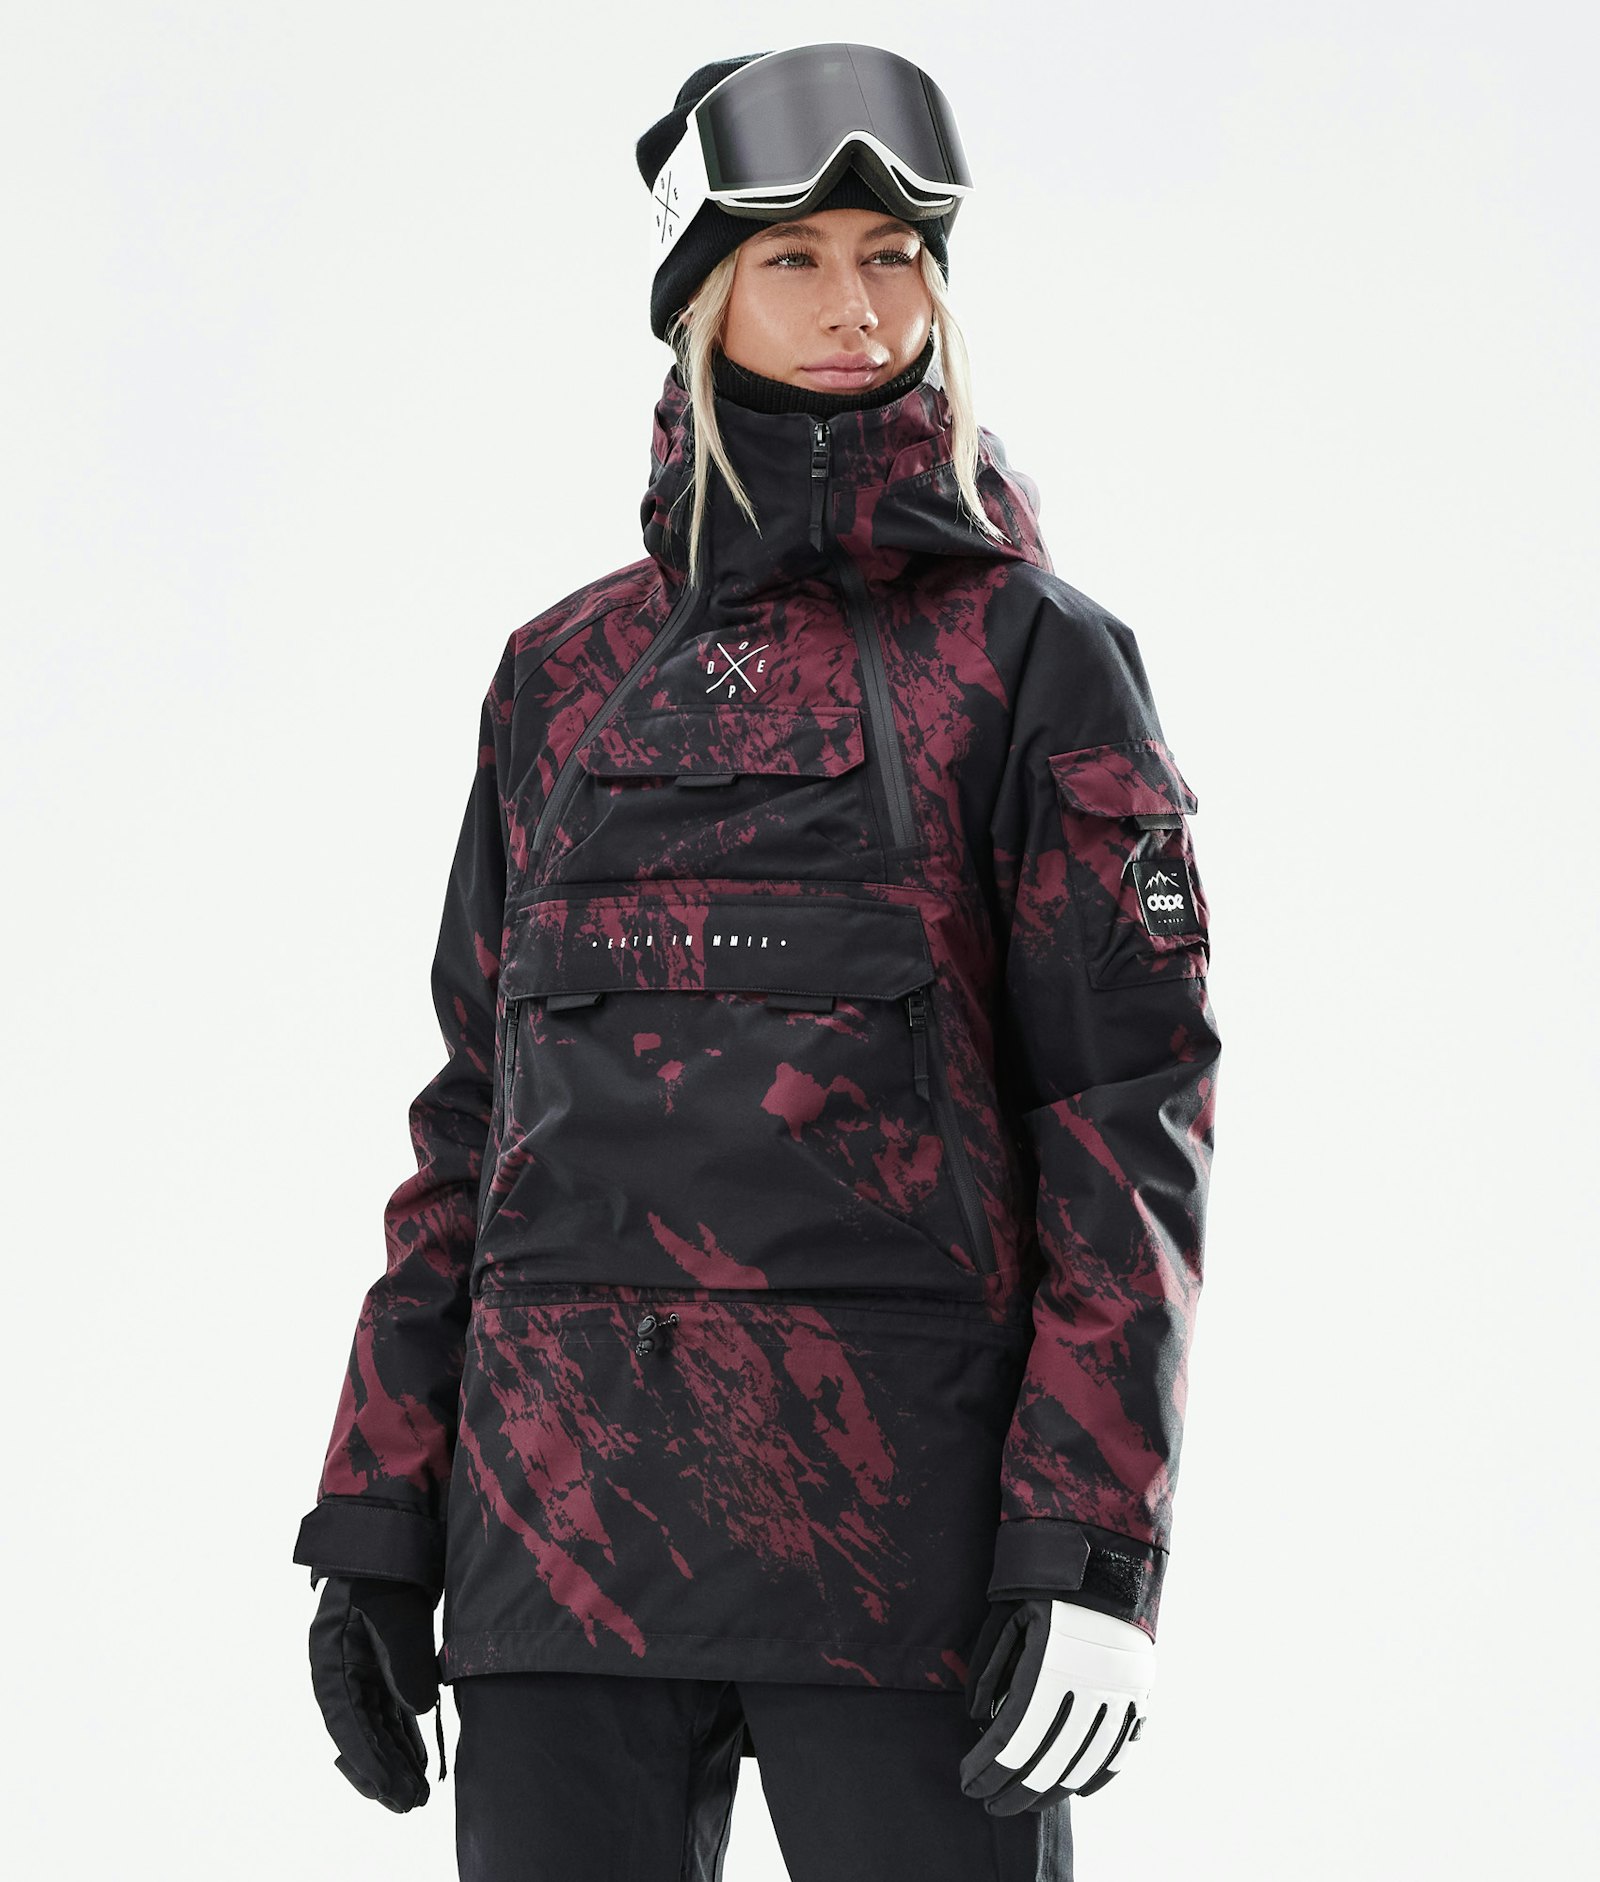 Akin W 2021 Veste de Ski Femme Paint Burgundy